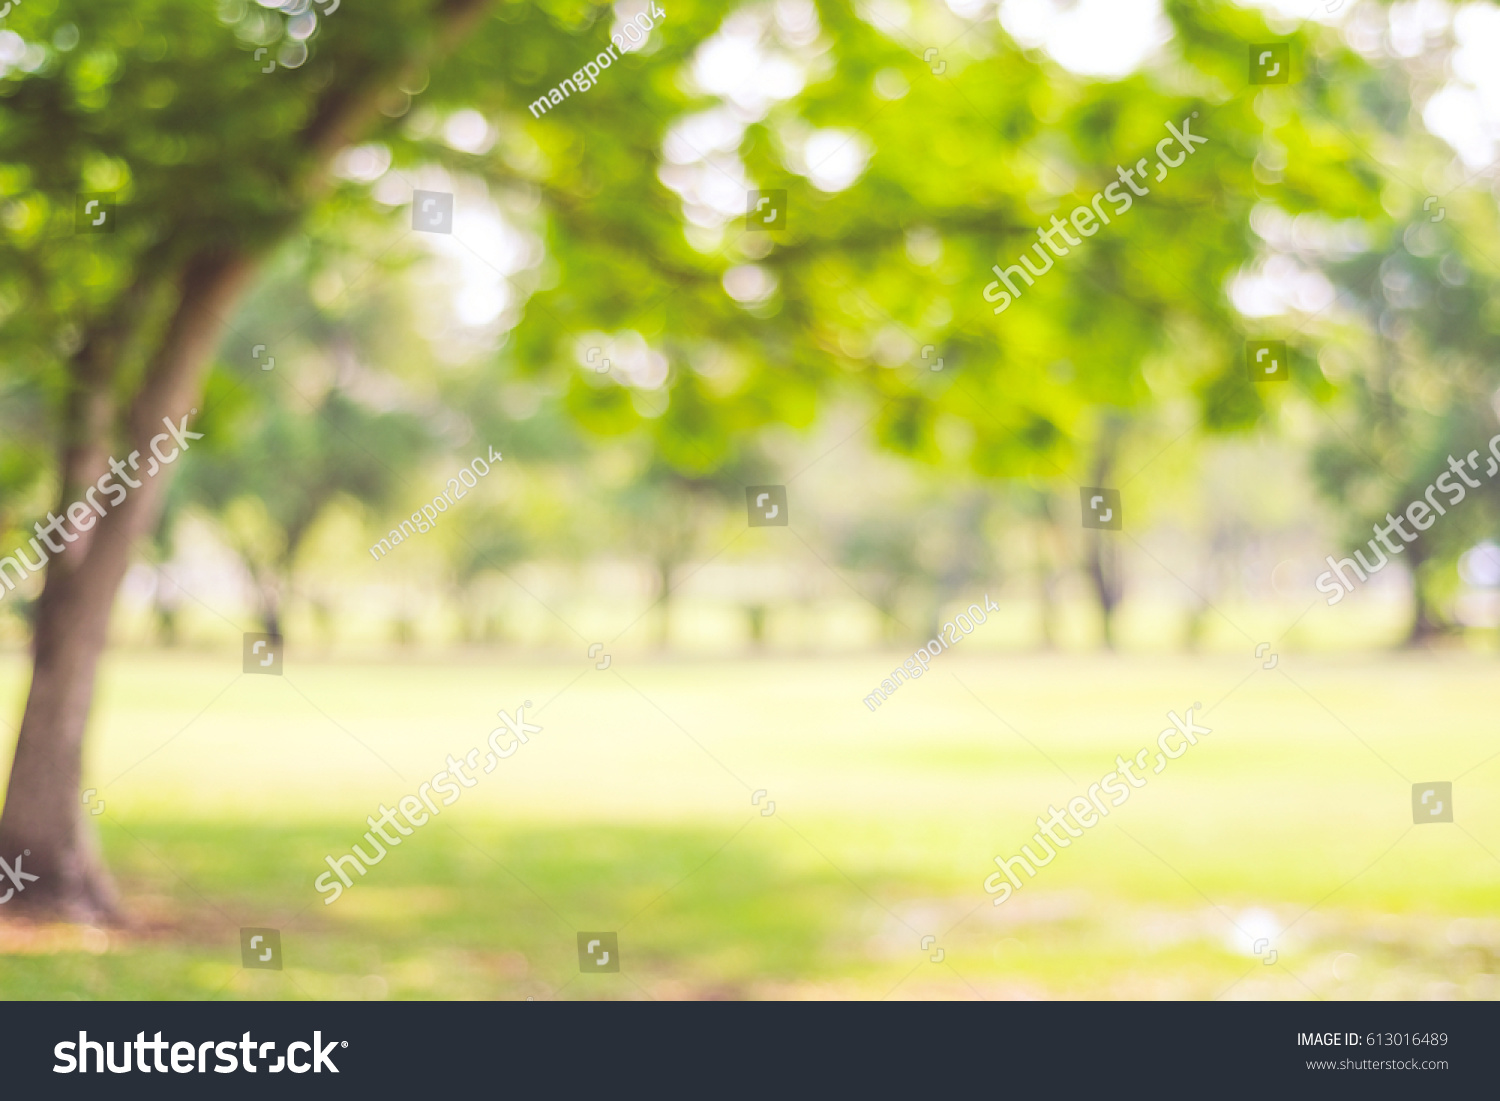 Blur park garden tree in nature background, blurry green bokeh light outdoor in summer background #613016489